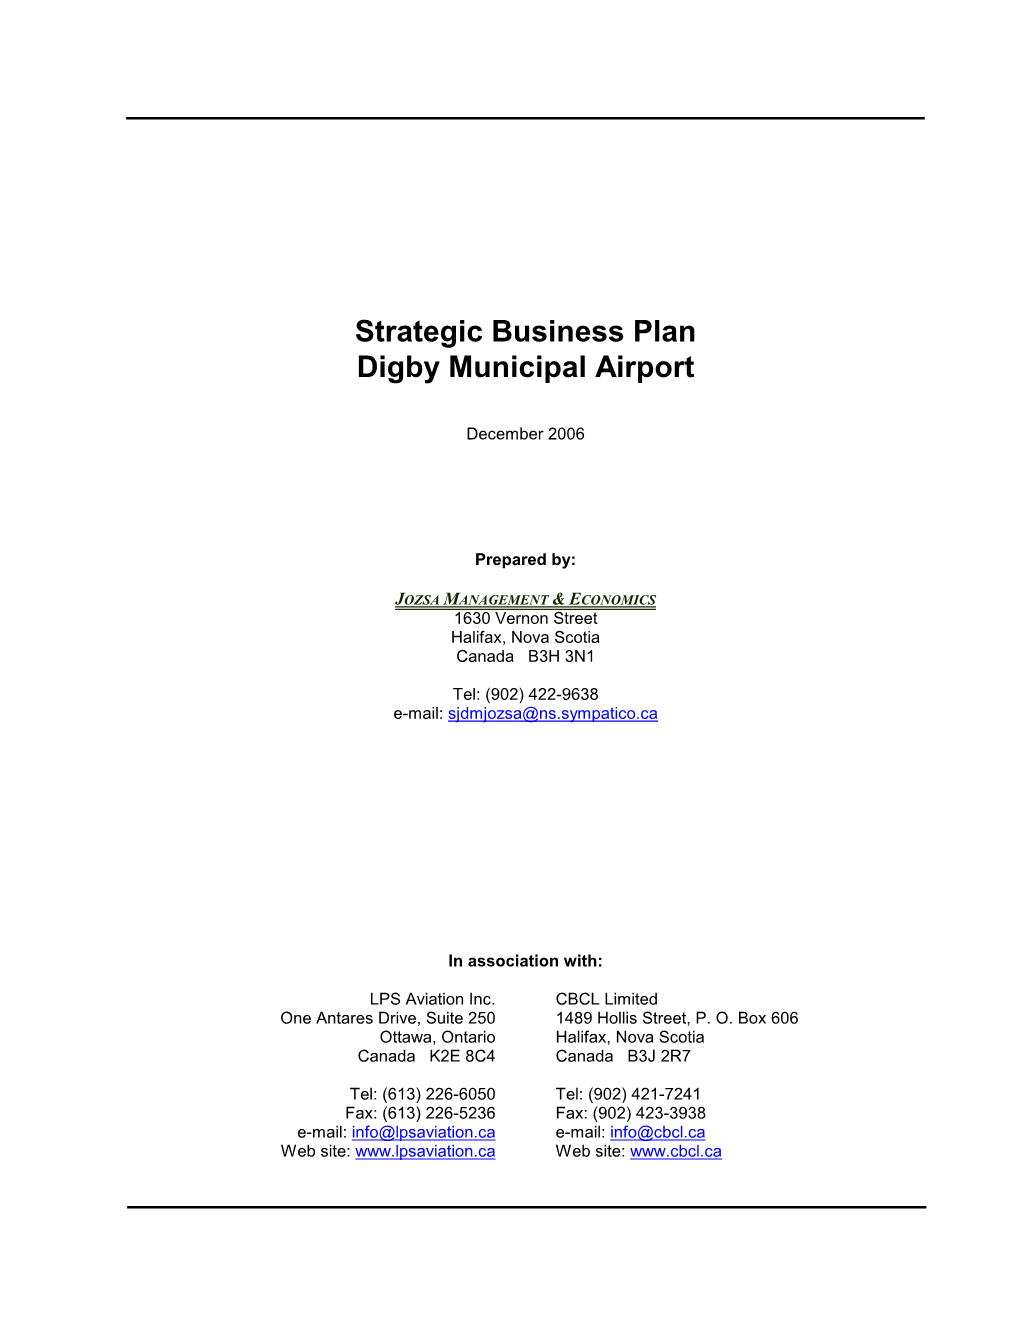 Strategic Business Plan Digby Municipal Airport